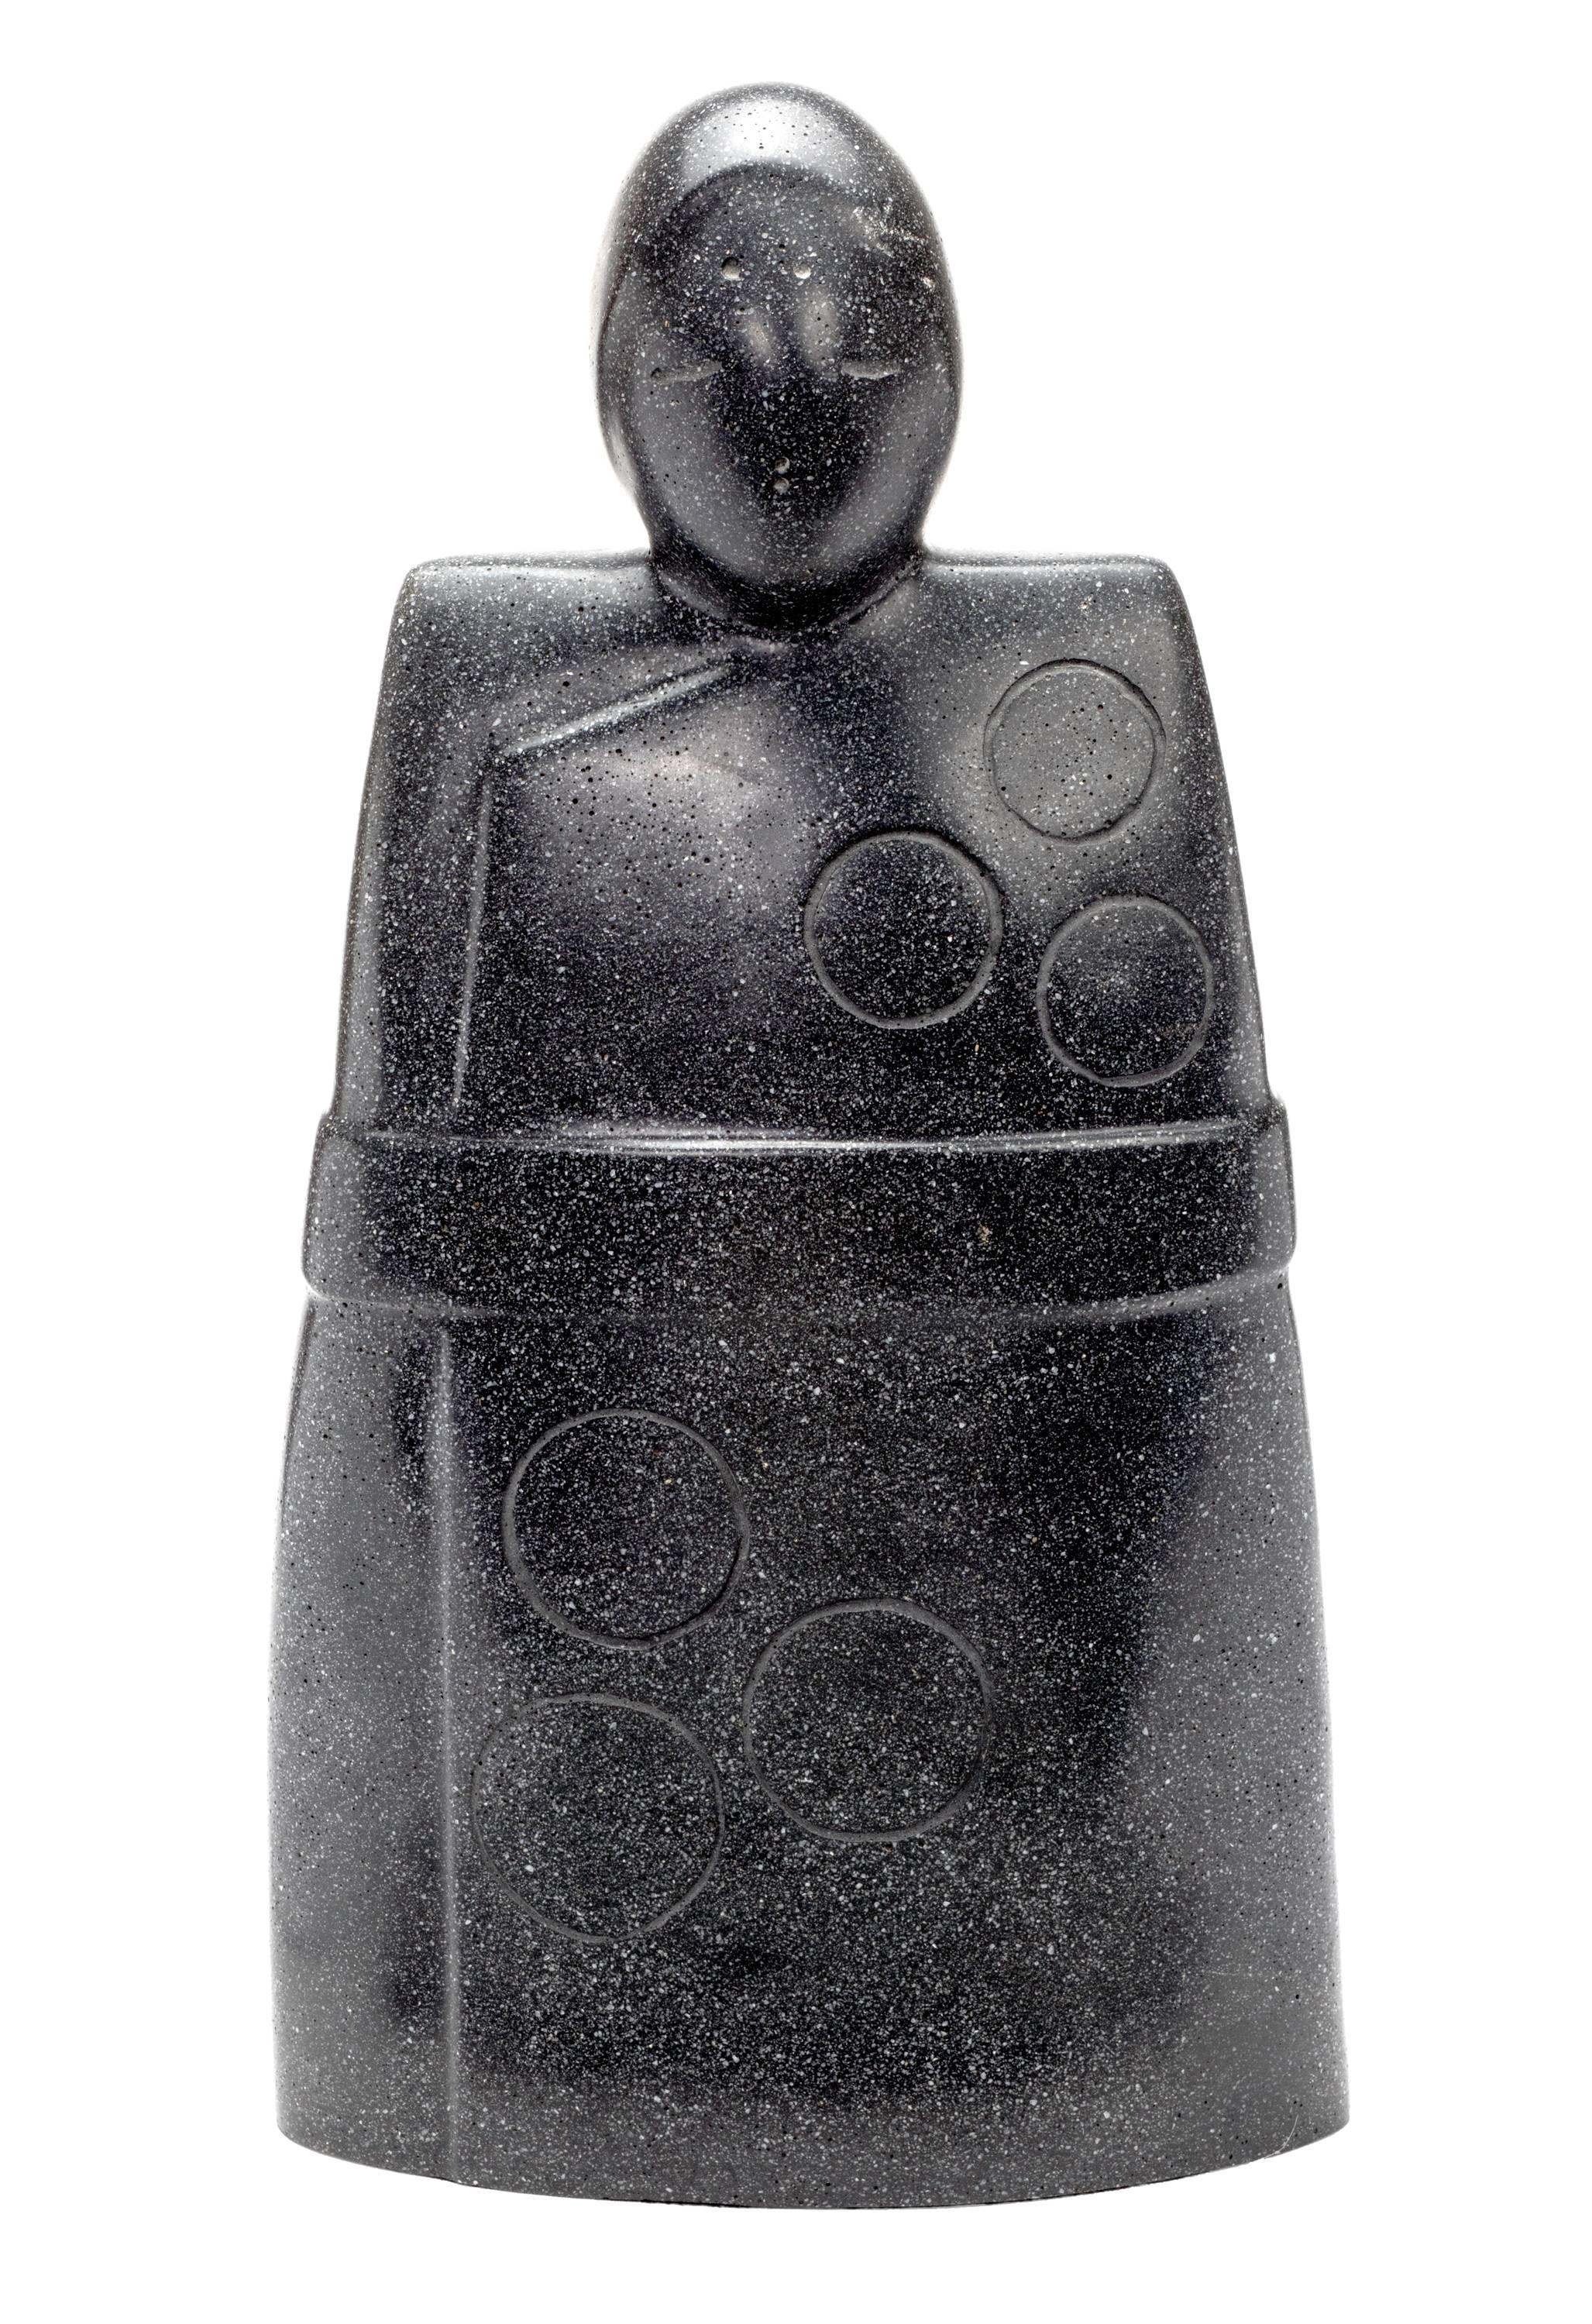 Serene peaceful abstract figure in black cast stone by Masatoyo Kishi. (b.1924). Signed Kuki, numbered 32/200.